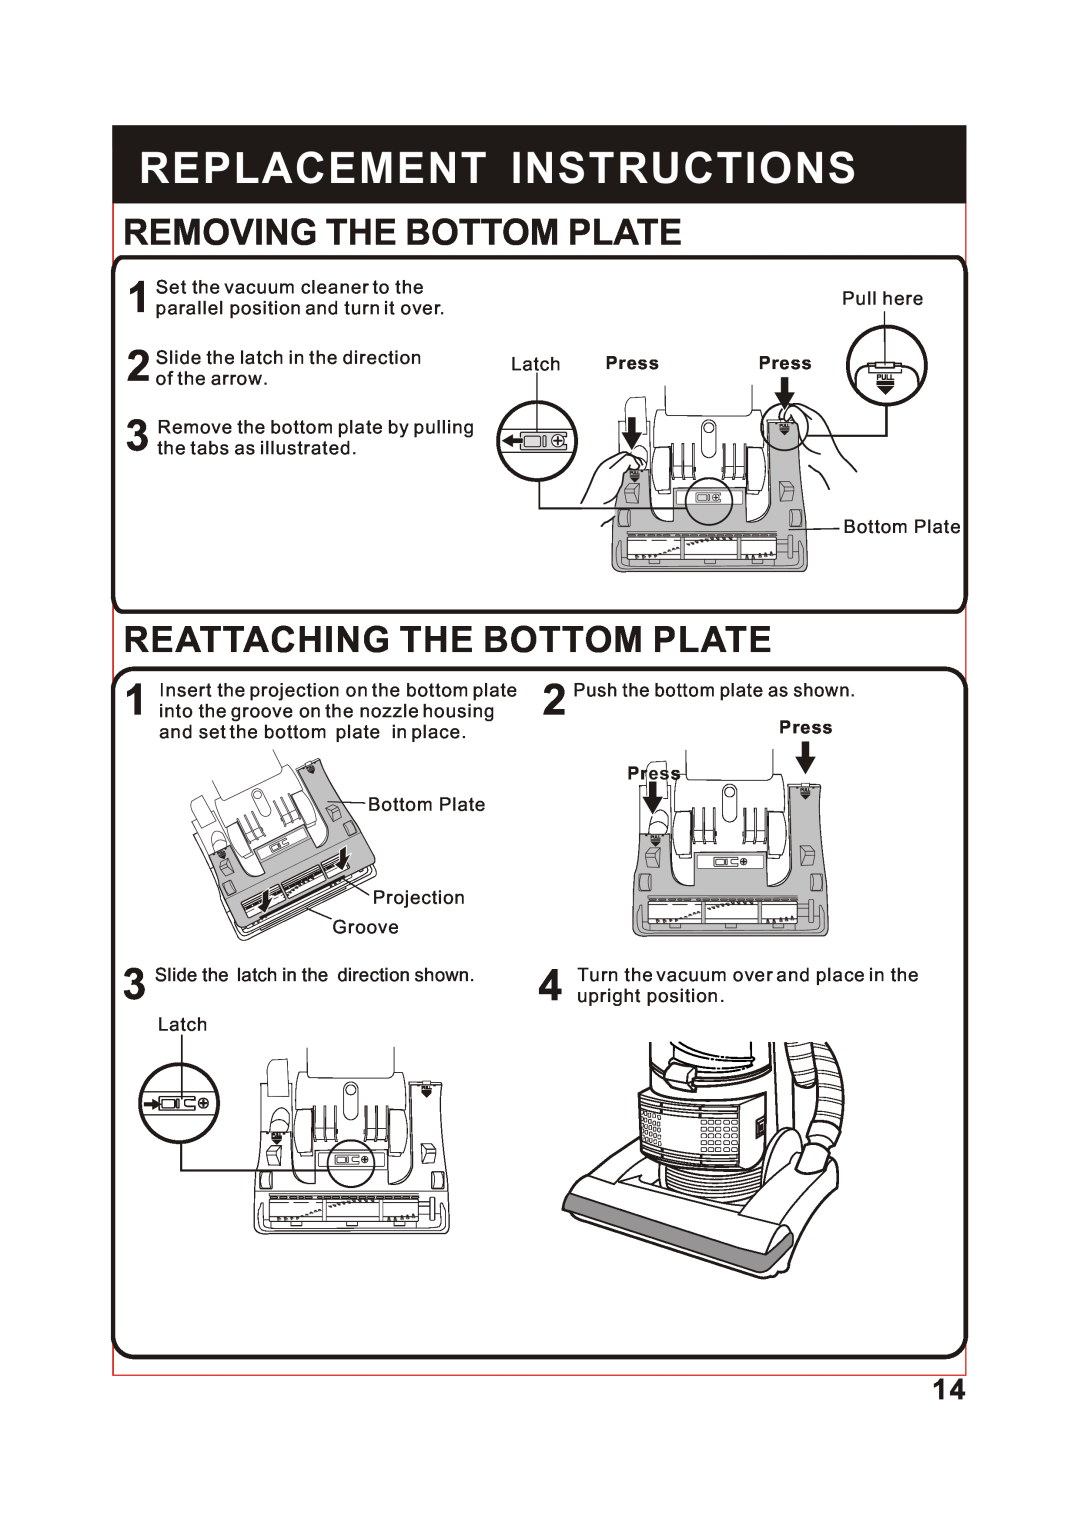 Fantom Vacuum FM741 instruction manual Removing The Bottom Plate, Reattaching The Bottom Plate, Replacement Instructions 